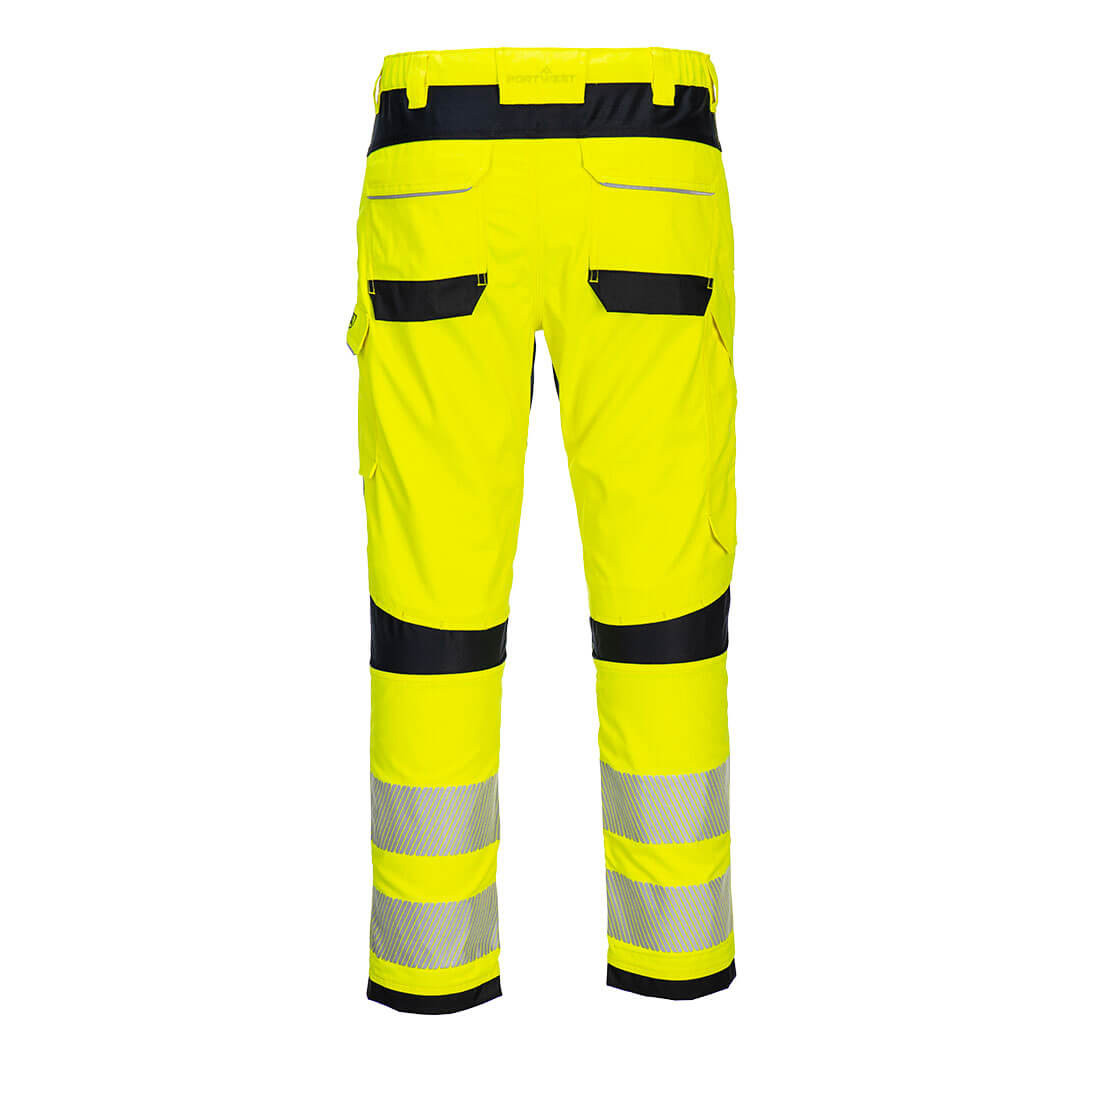 PW3 FR Hi-Vis Work Trousers - Safetywear